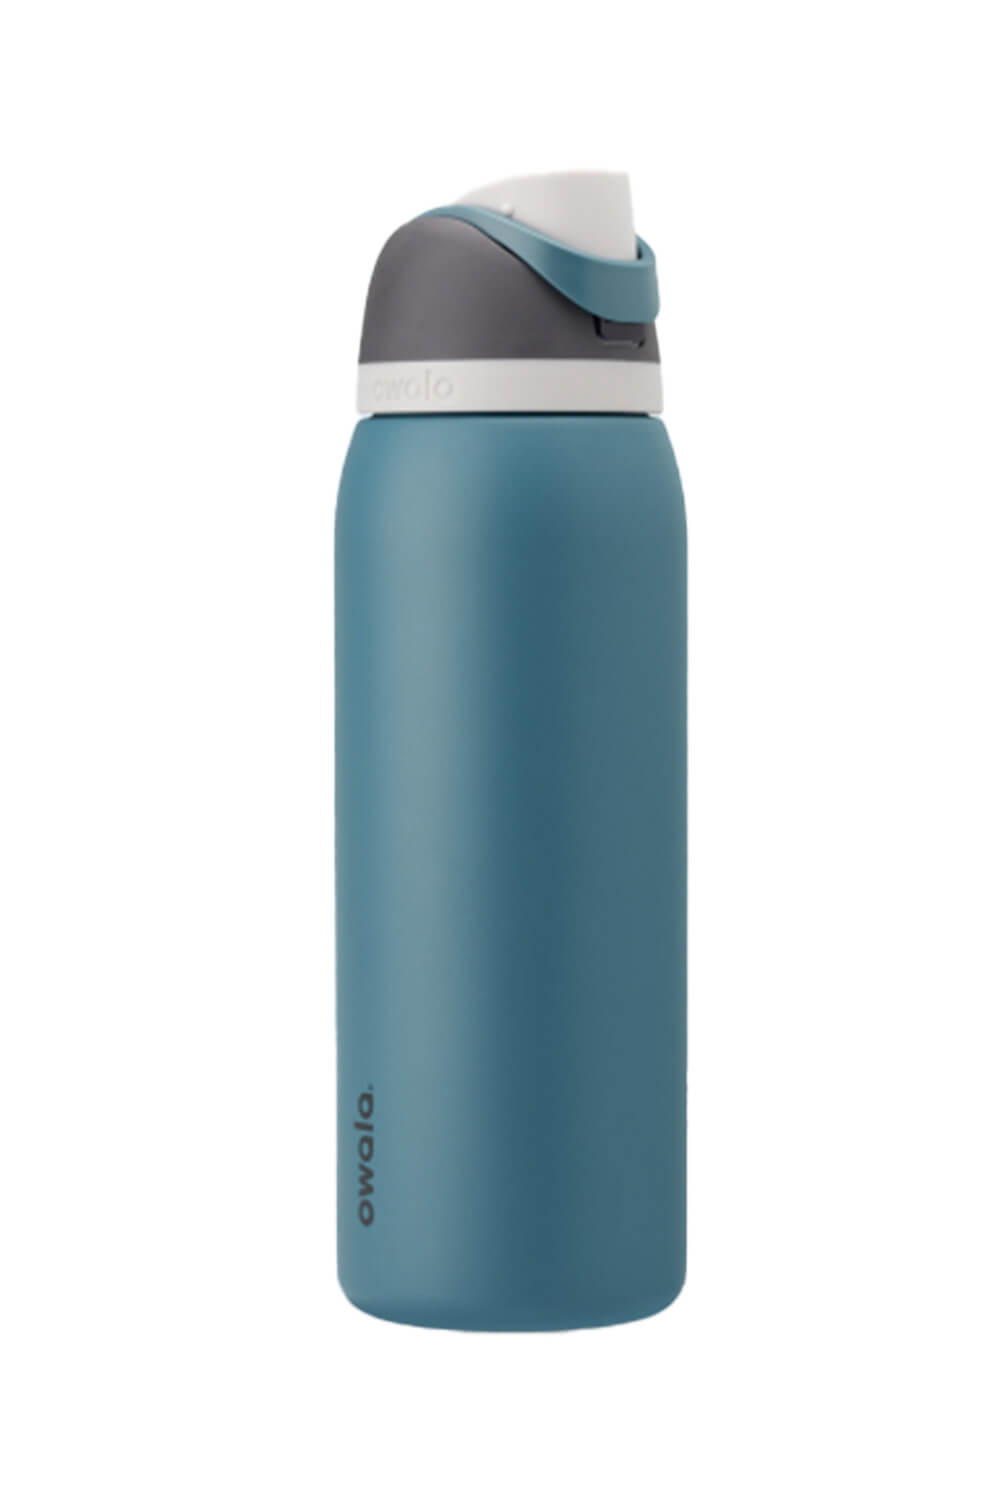 Owala 40 oz. FreeSip Stainless Steel Water Bottle, Blue Oasis